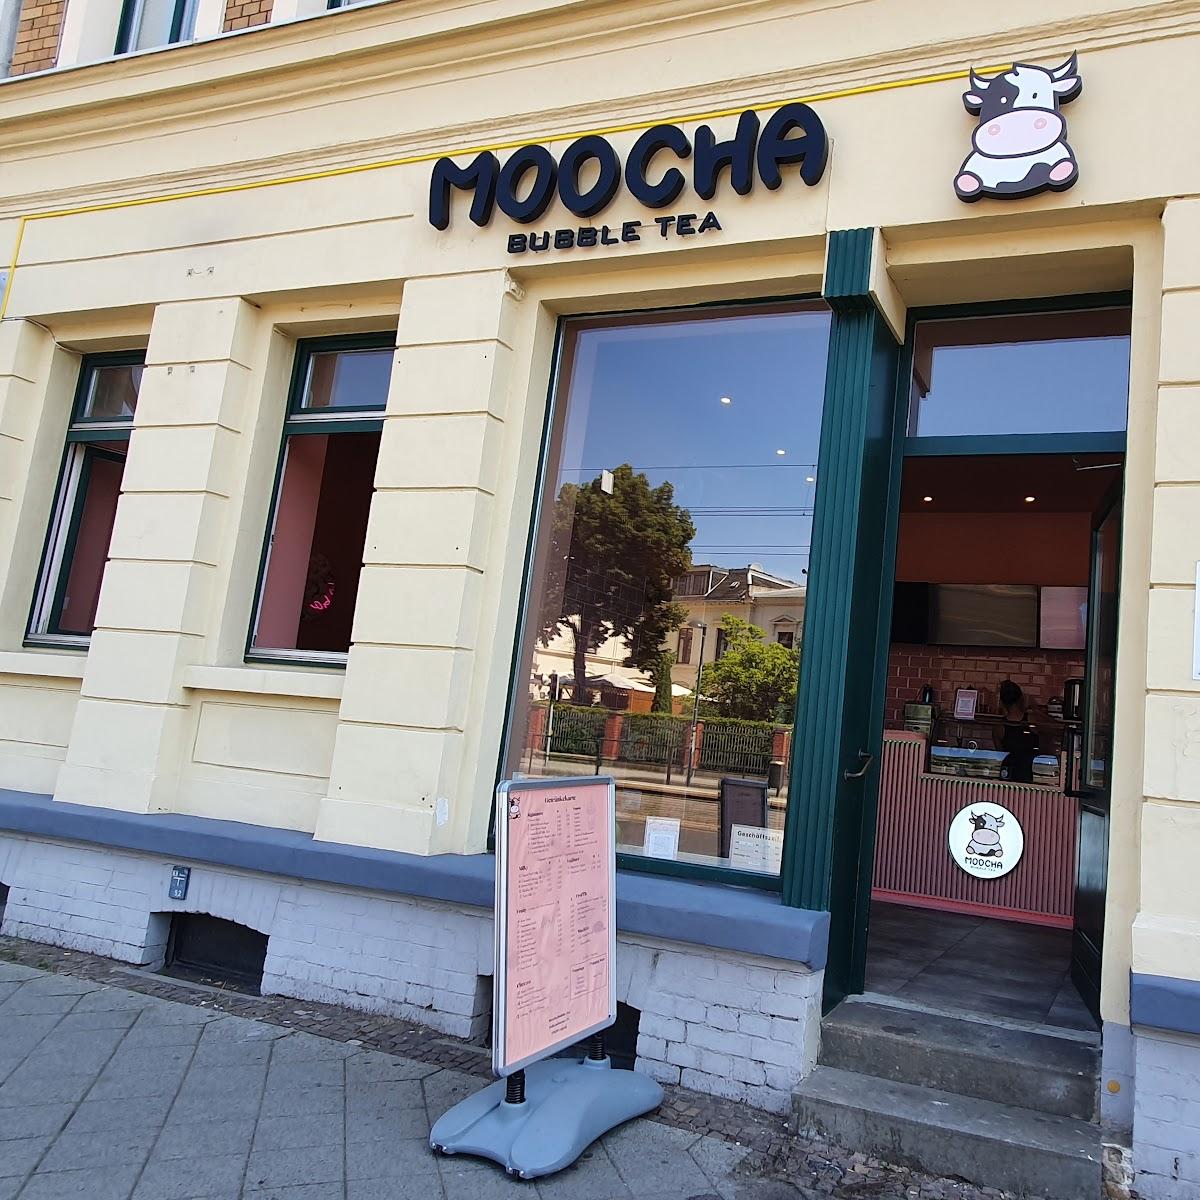 Restaurant "Moocha - Bubble Tea" in Leipzig